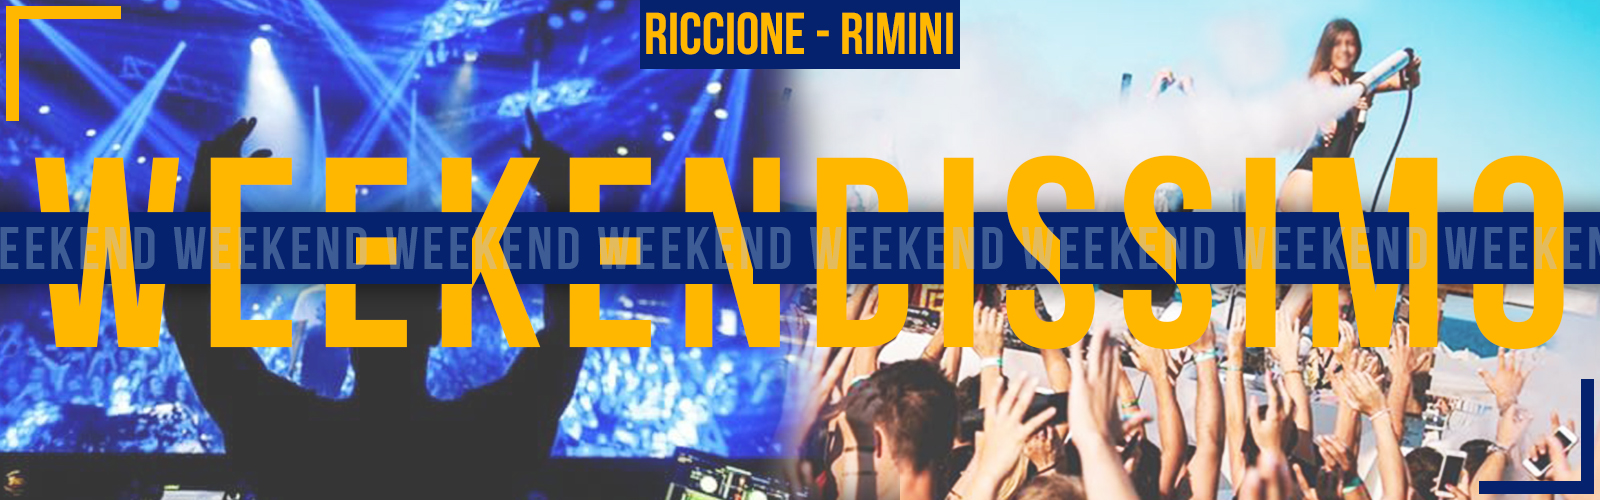 Pacchetto Vacanza WEEKEND Weekendissimo Riccione Rimini Hotel Discoteche